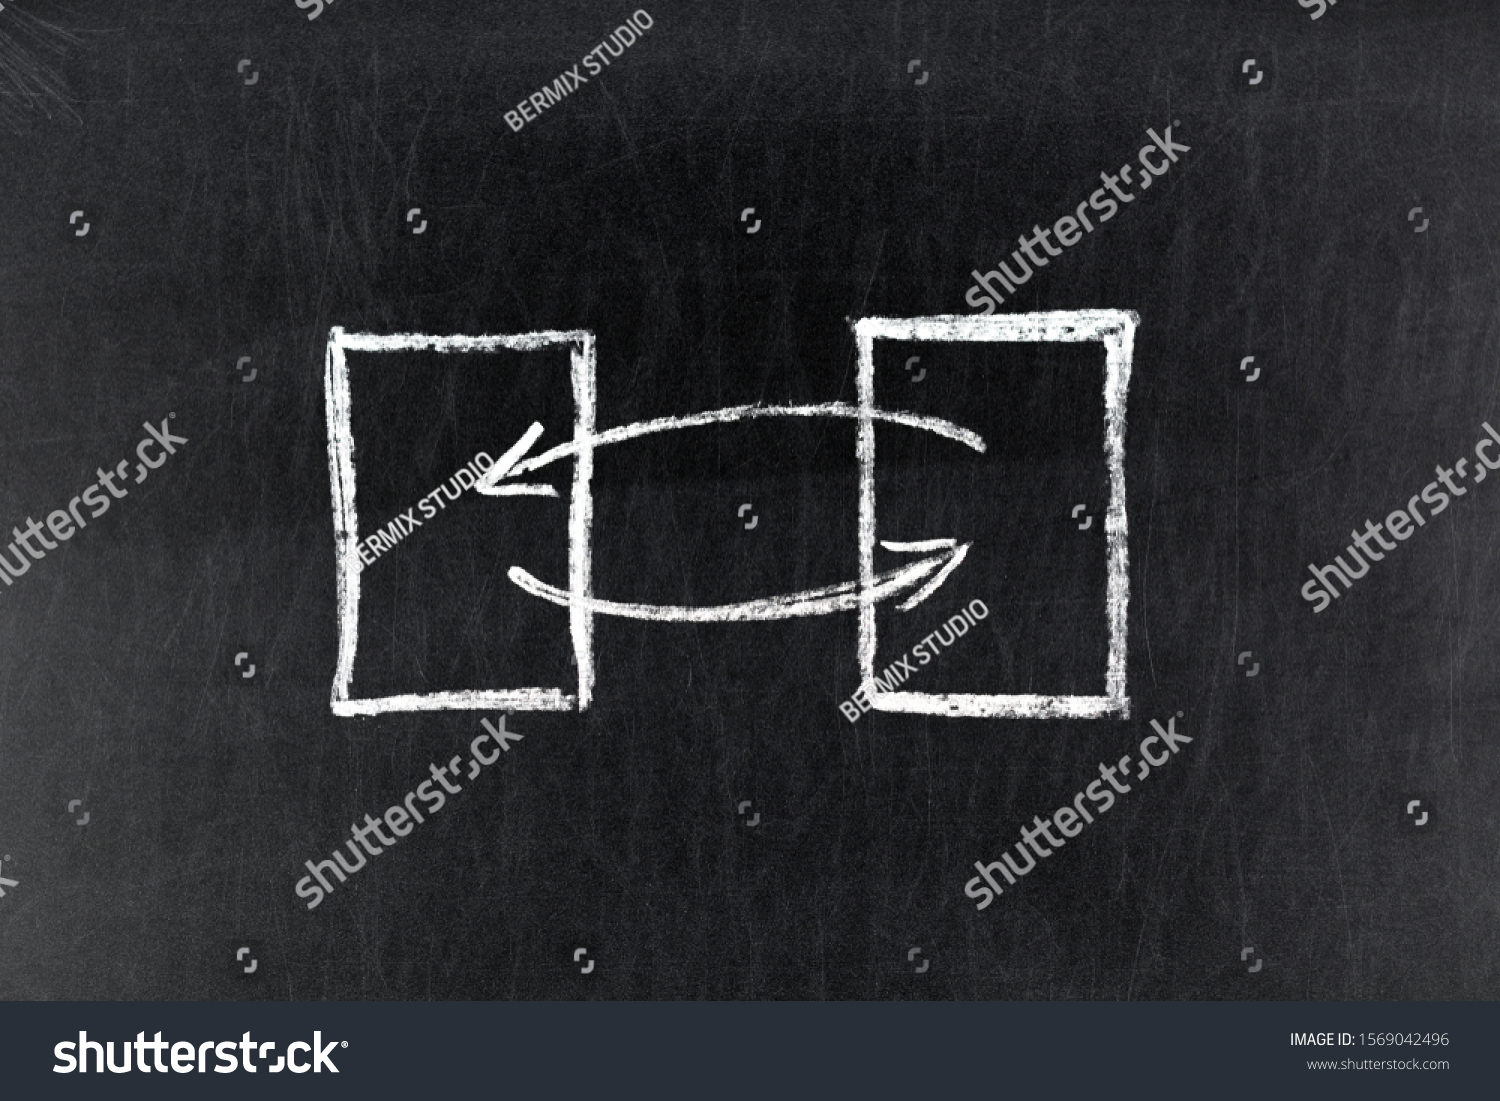 Exchange, swap concept on chalkboard, blackboard background #1569042496